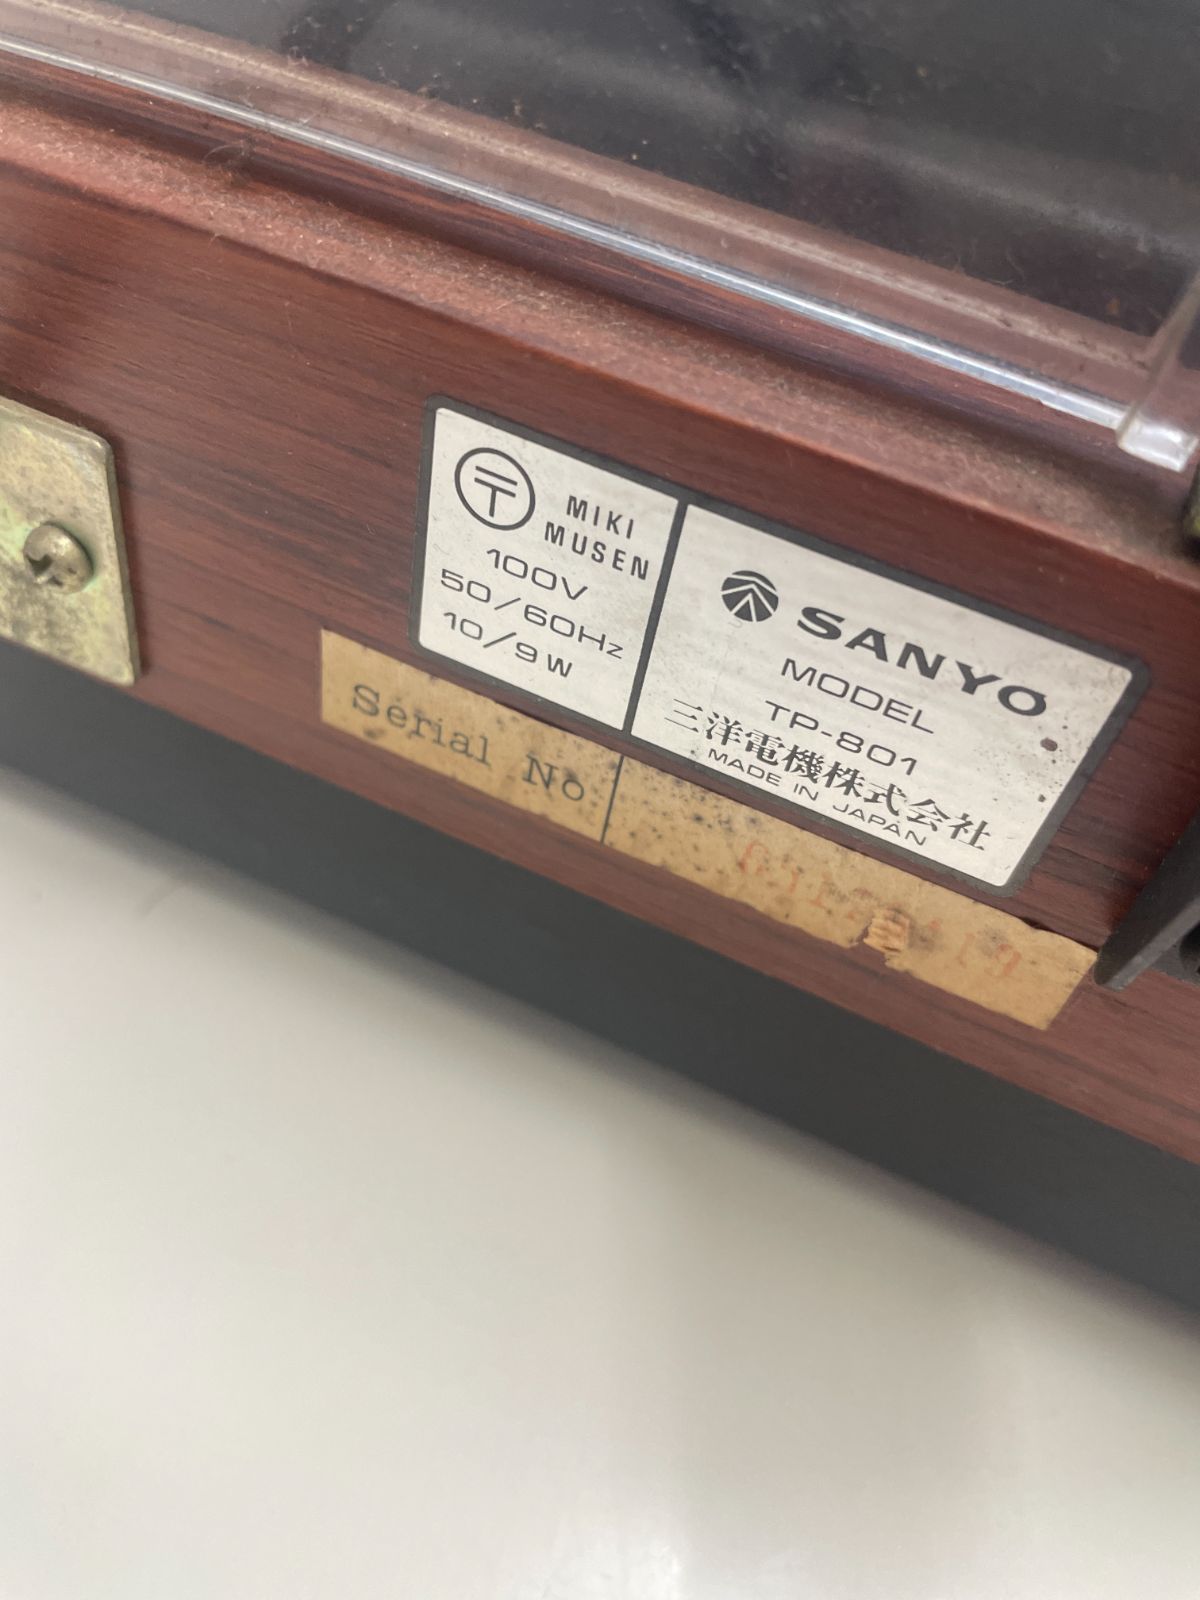 K【ジャンク】SANYO サンヨー OTTO レコードプレーヤー TP-801|mercariメルカリ官方指定廠商|Bibian比比昂代買代購